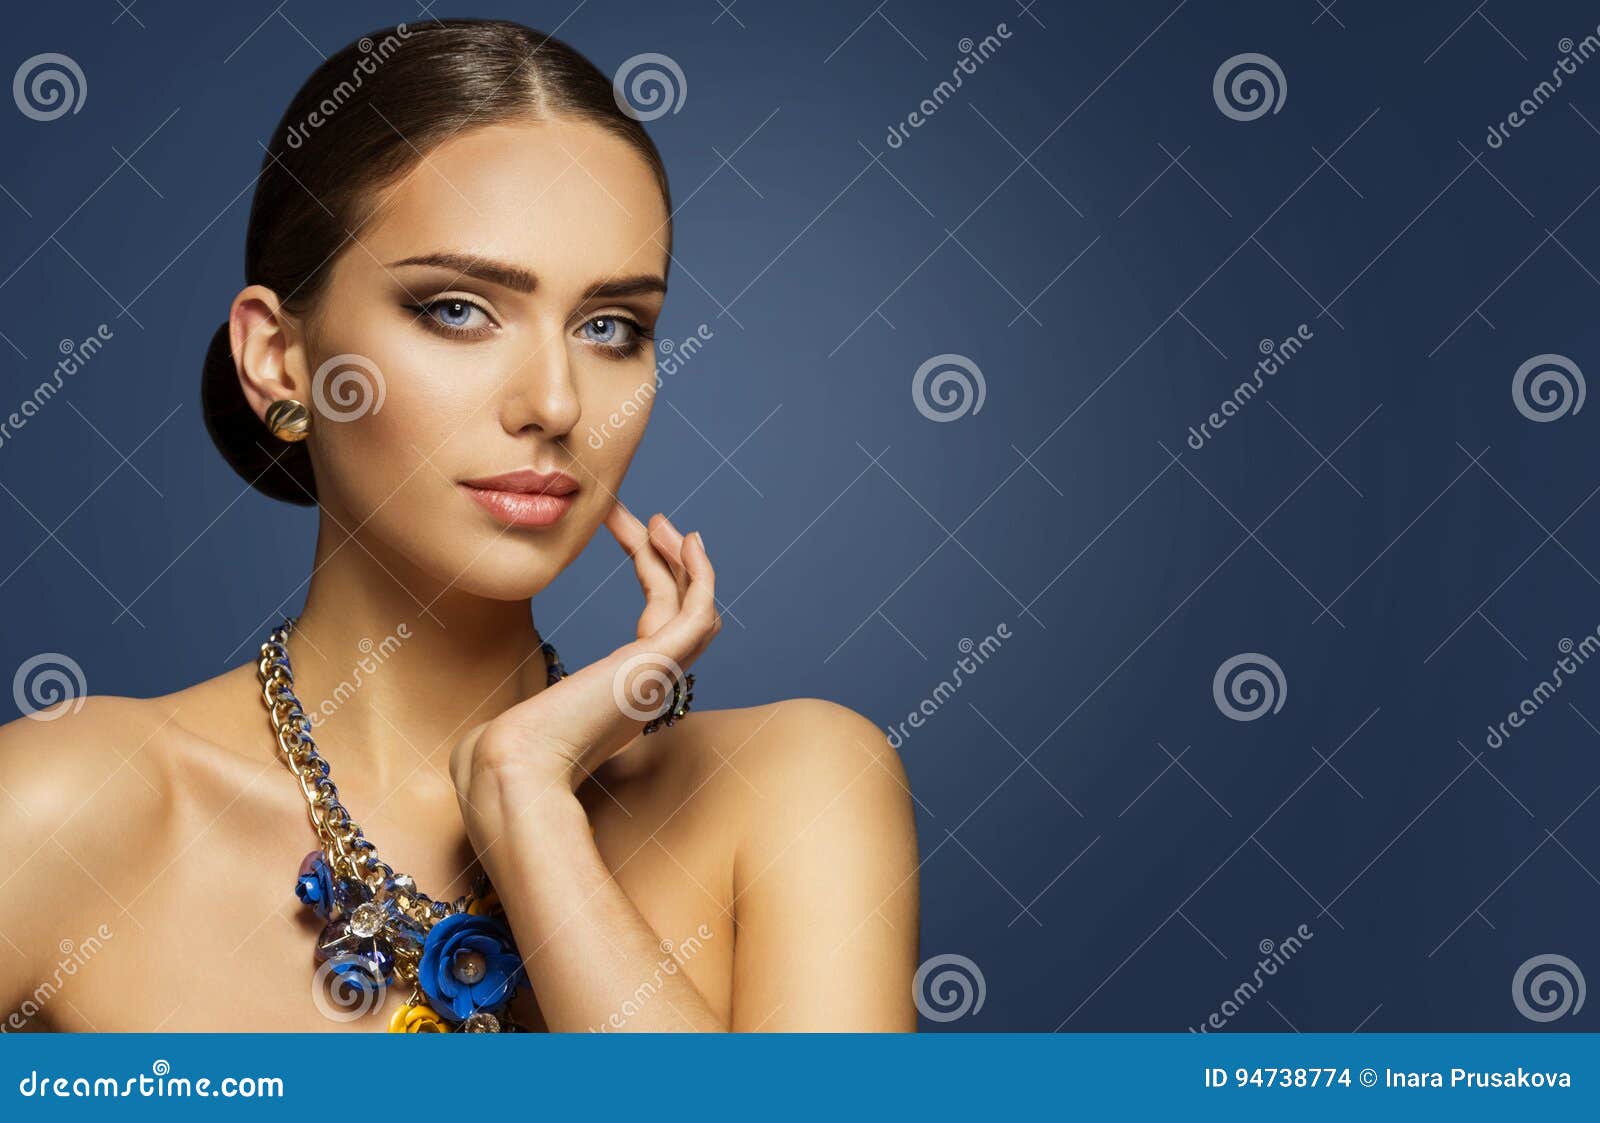 fashion model makeup, elegan woman beauty face make up portrait